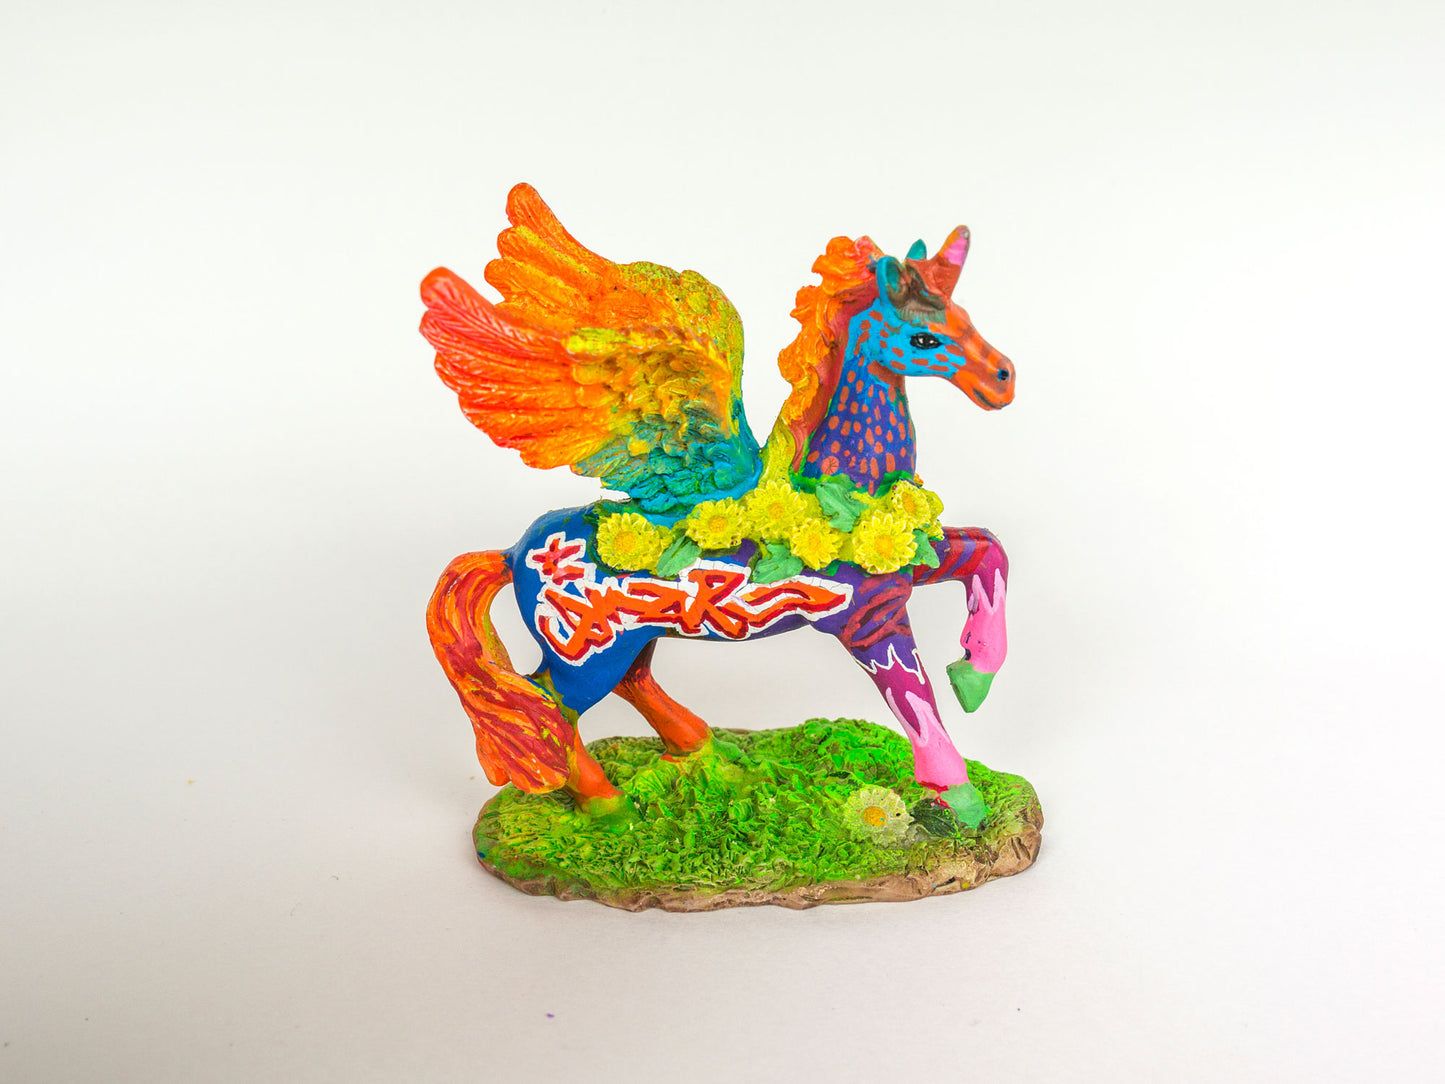 Art Object Toy - "unicorn"